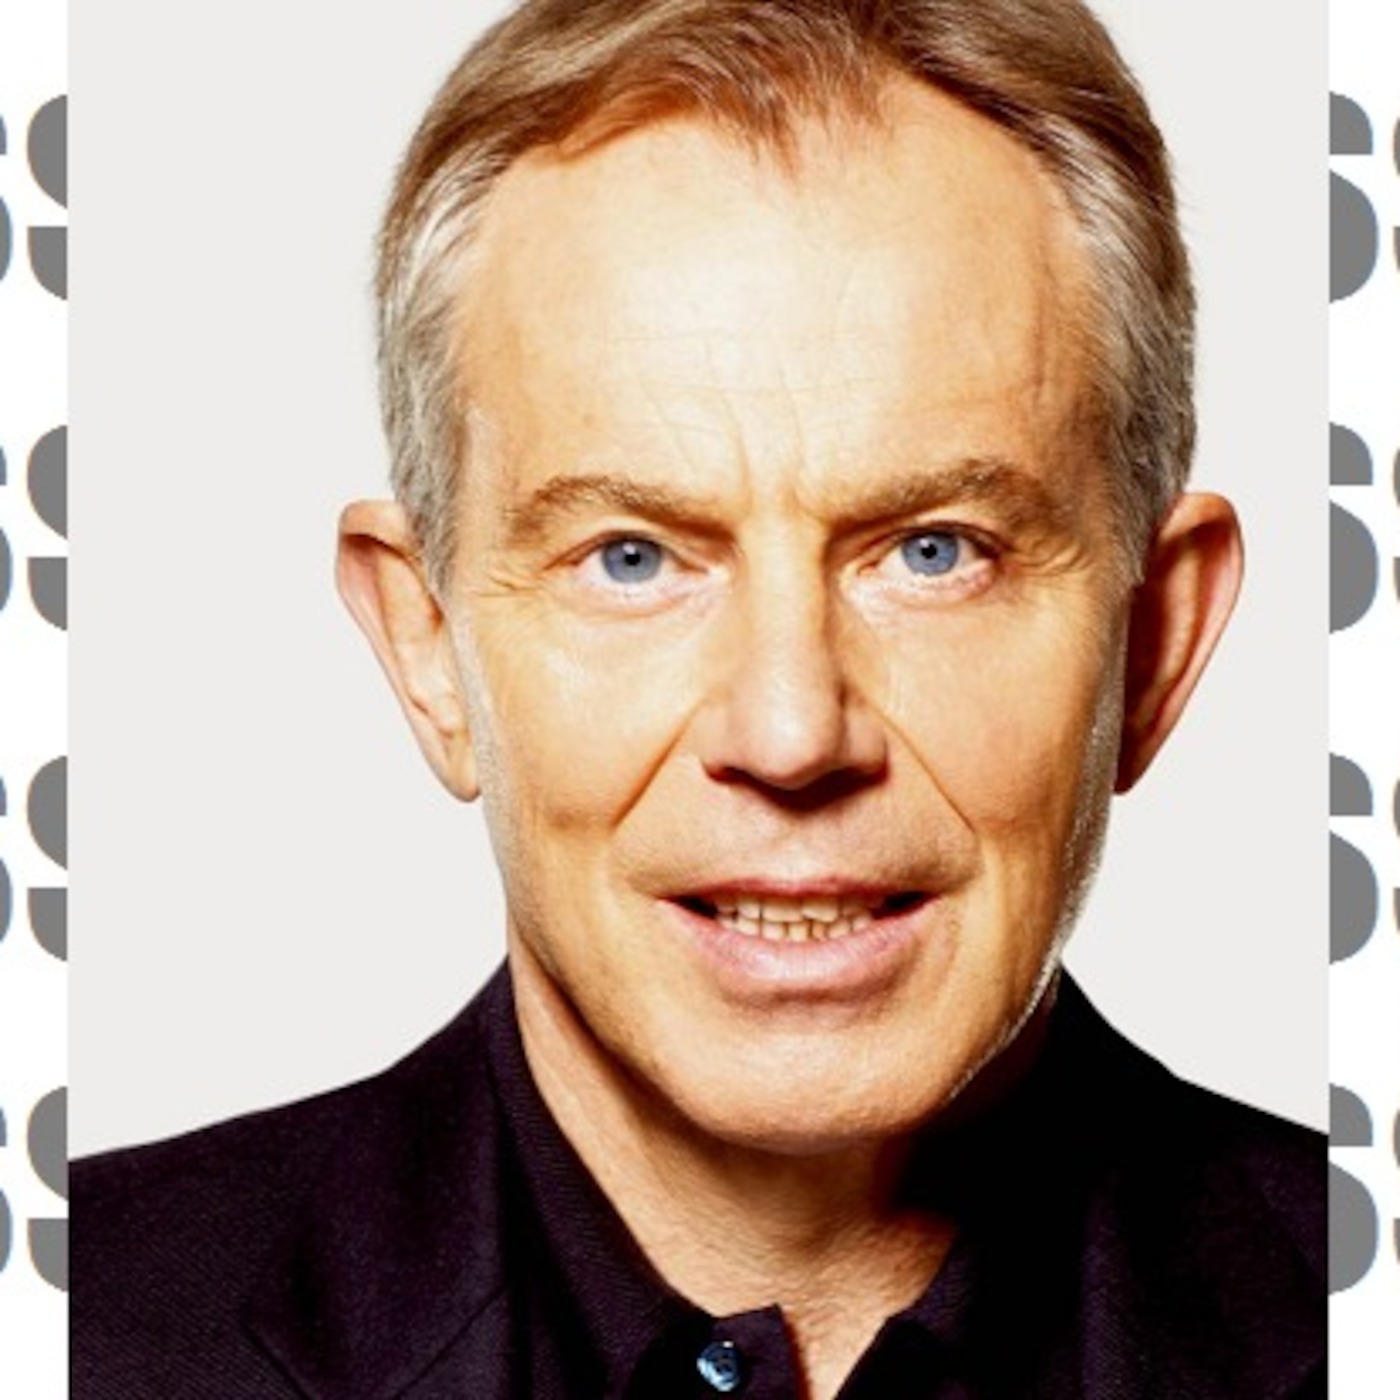 The Return of Tony Blair